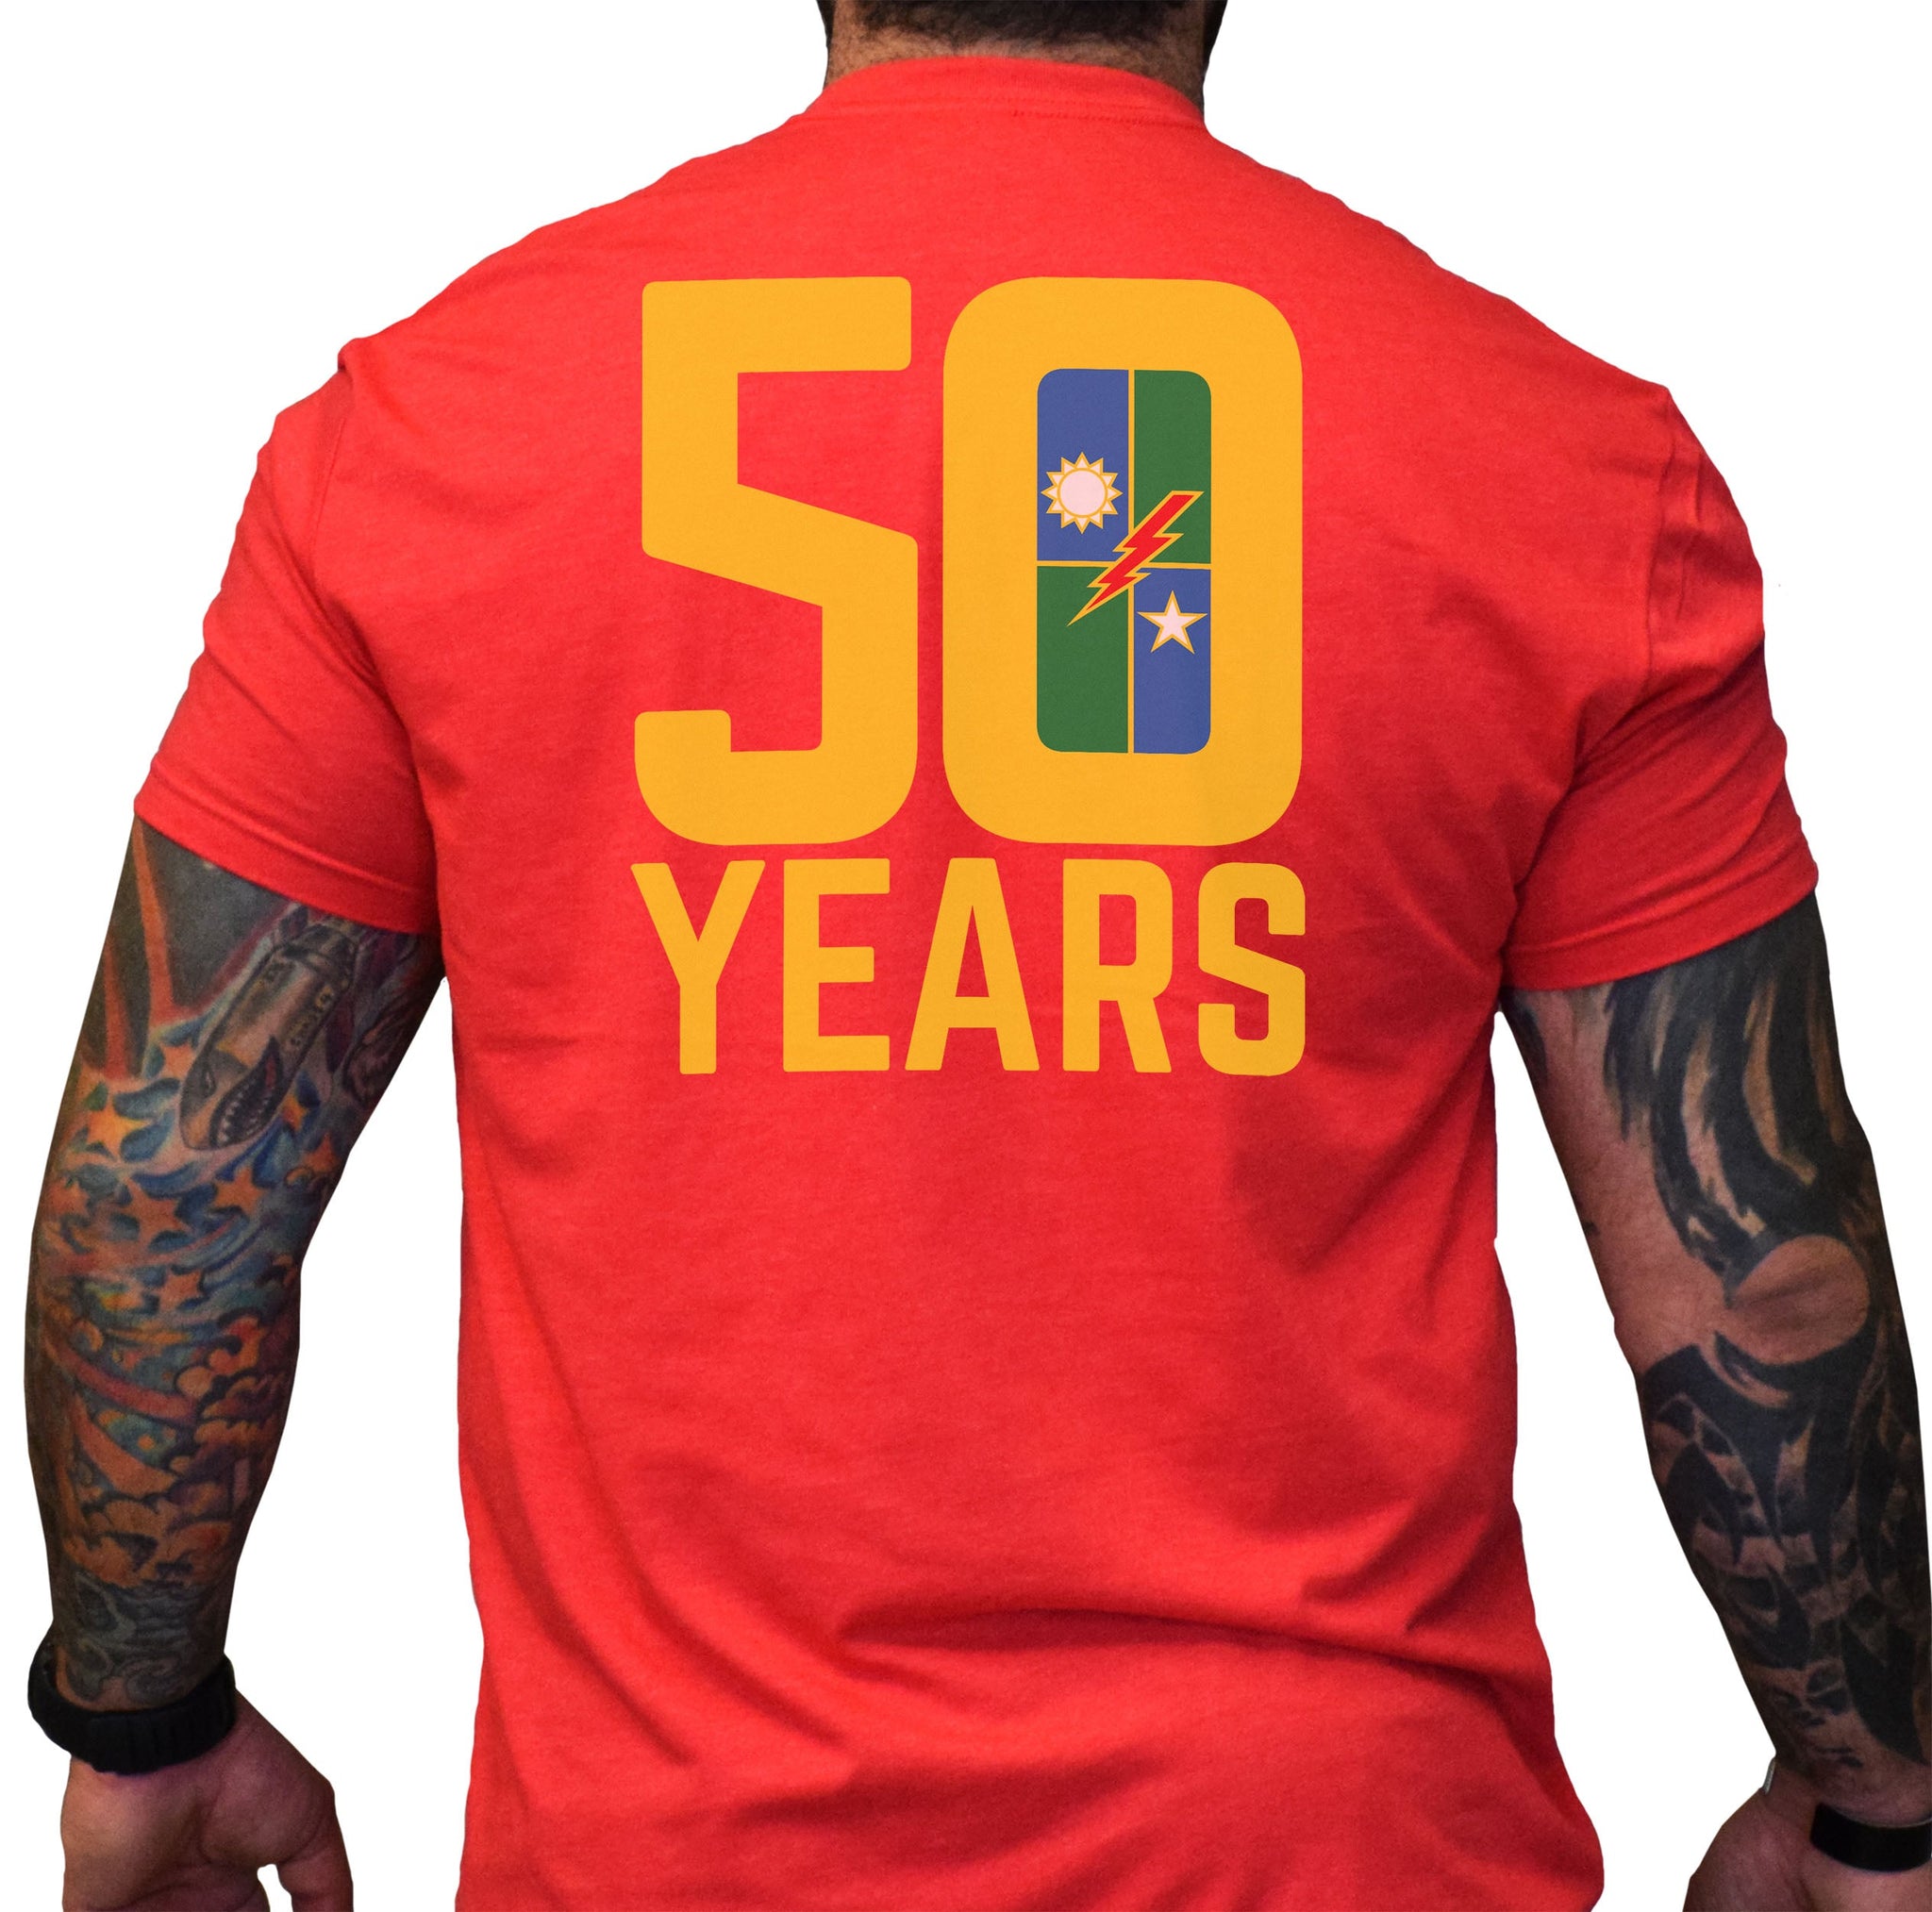 Ranger 50 Years Crosshair DUI Shirt